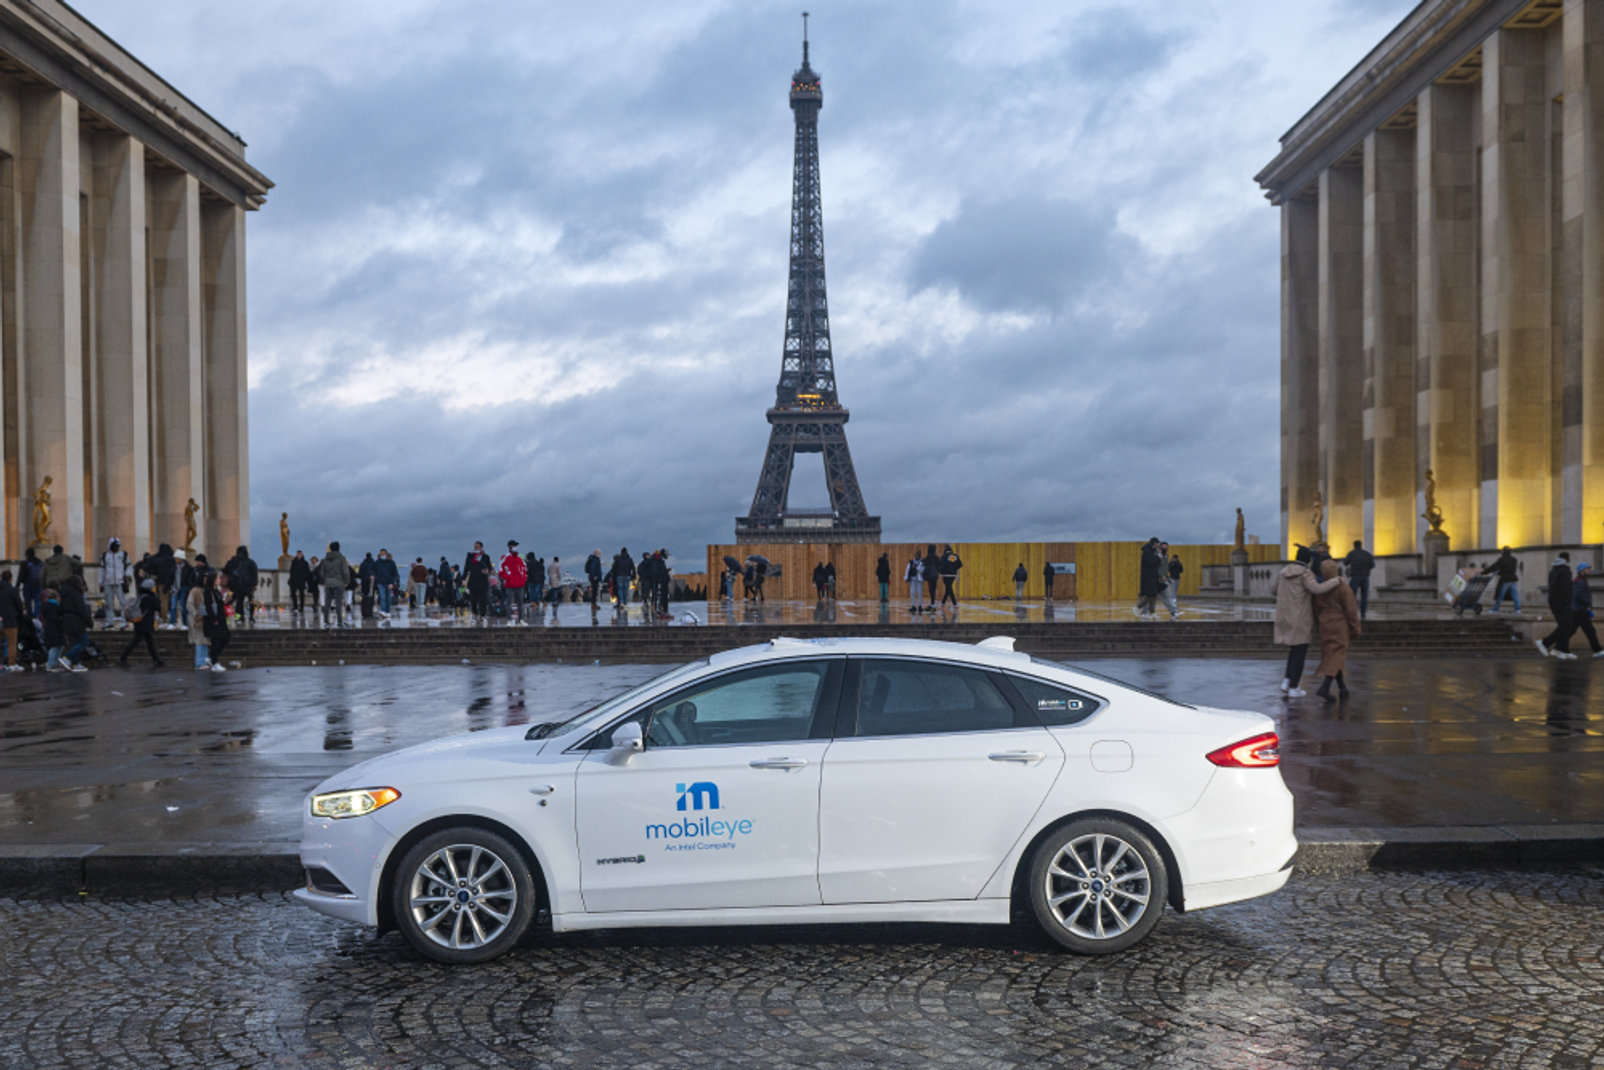 Mobileye autonomous vehicle by the Eiffel Tower in Paris